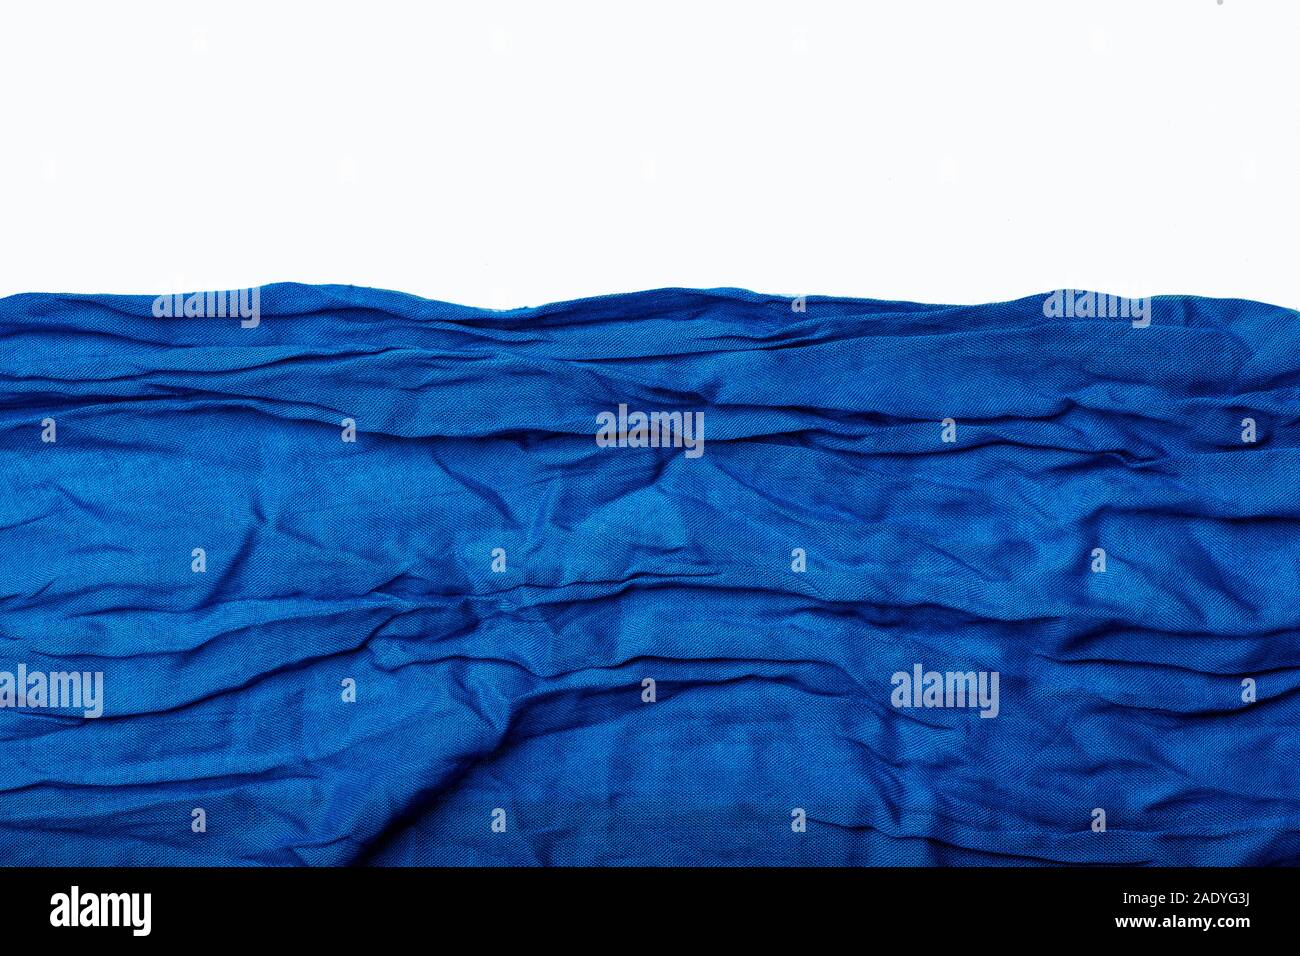 Farbe des Jahres 2020 Pantone Classic Blue Hintergrund Stockfoto